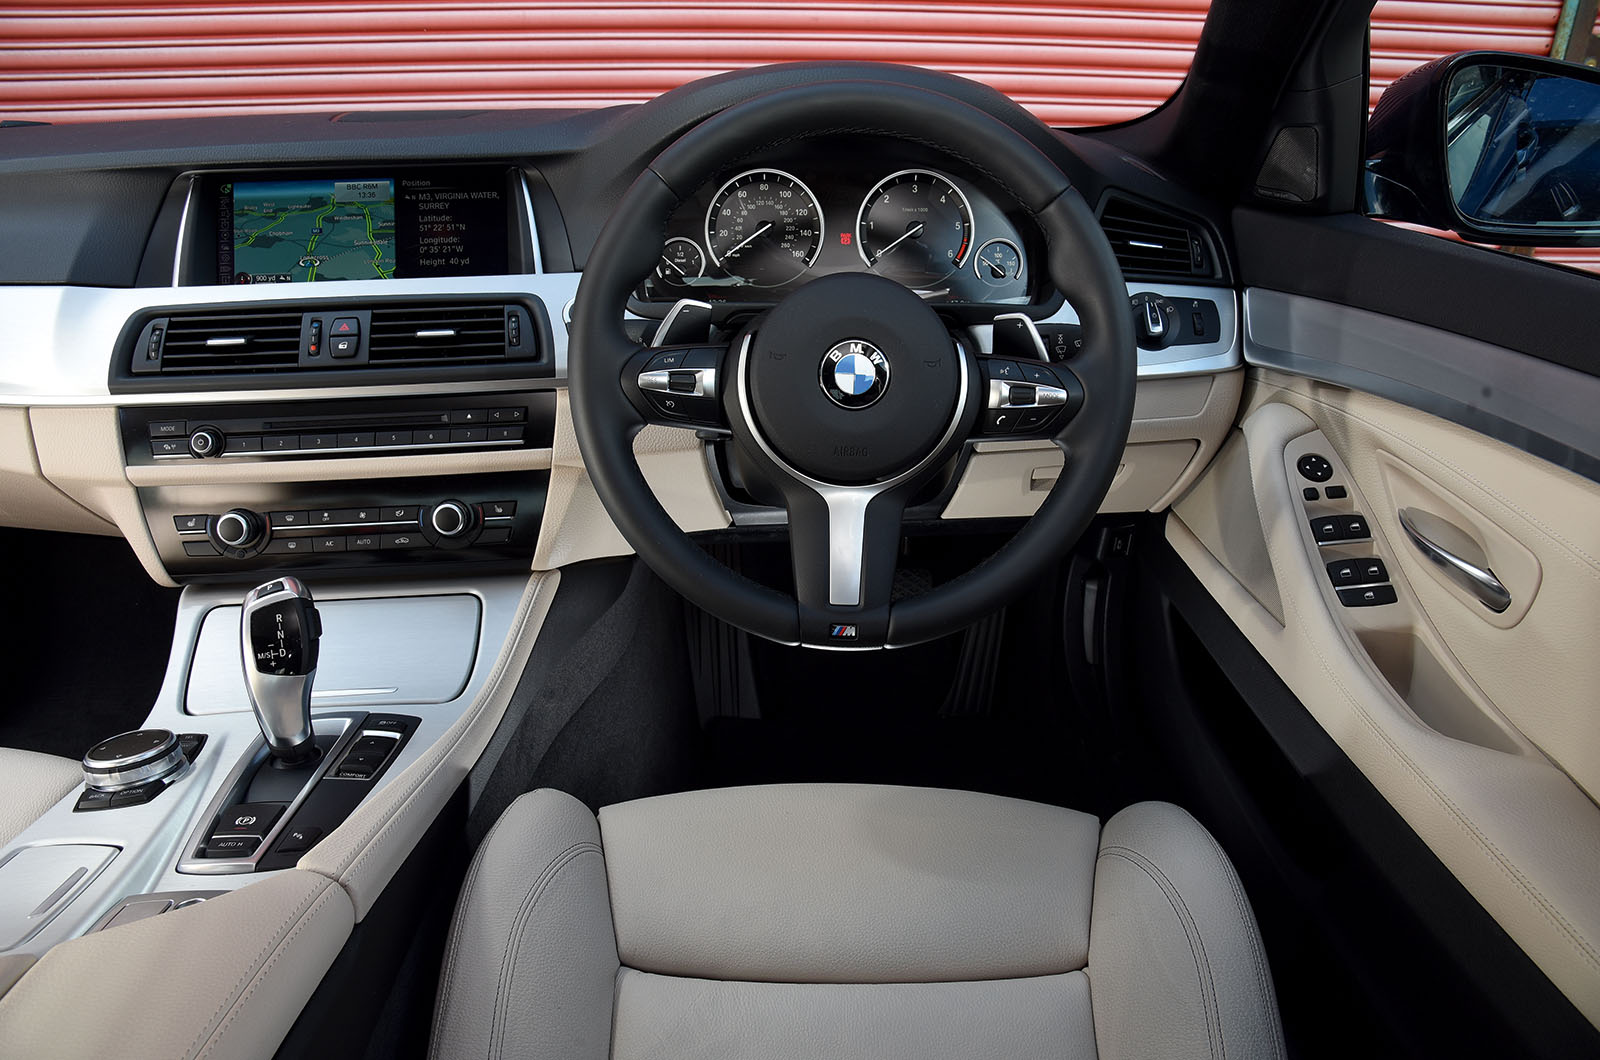 BMW 5 Series dashboard